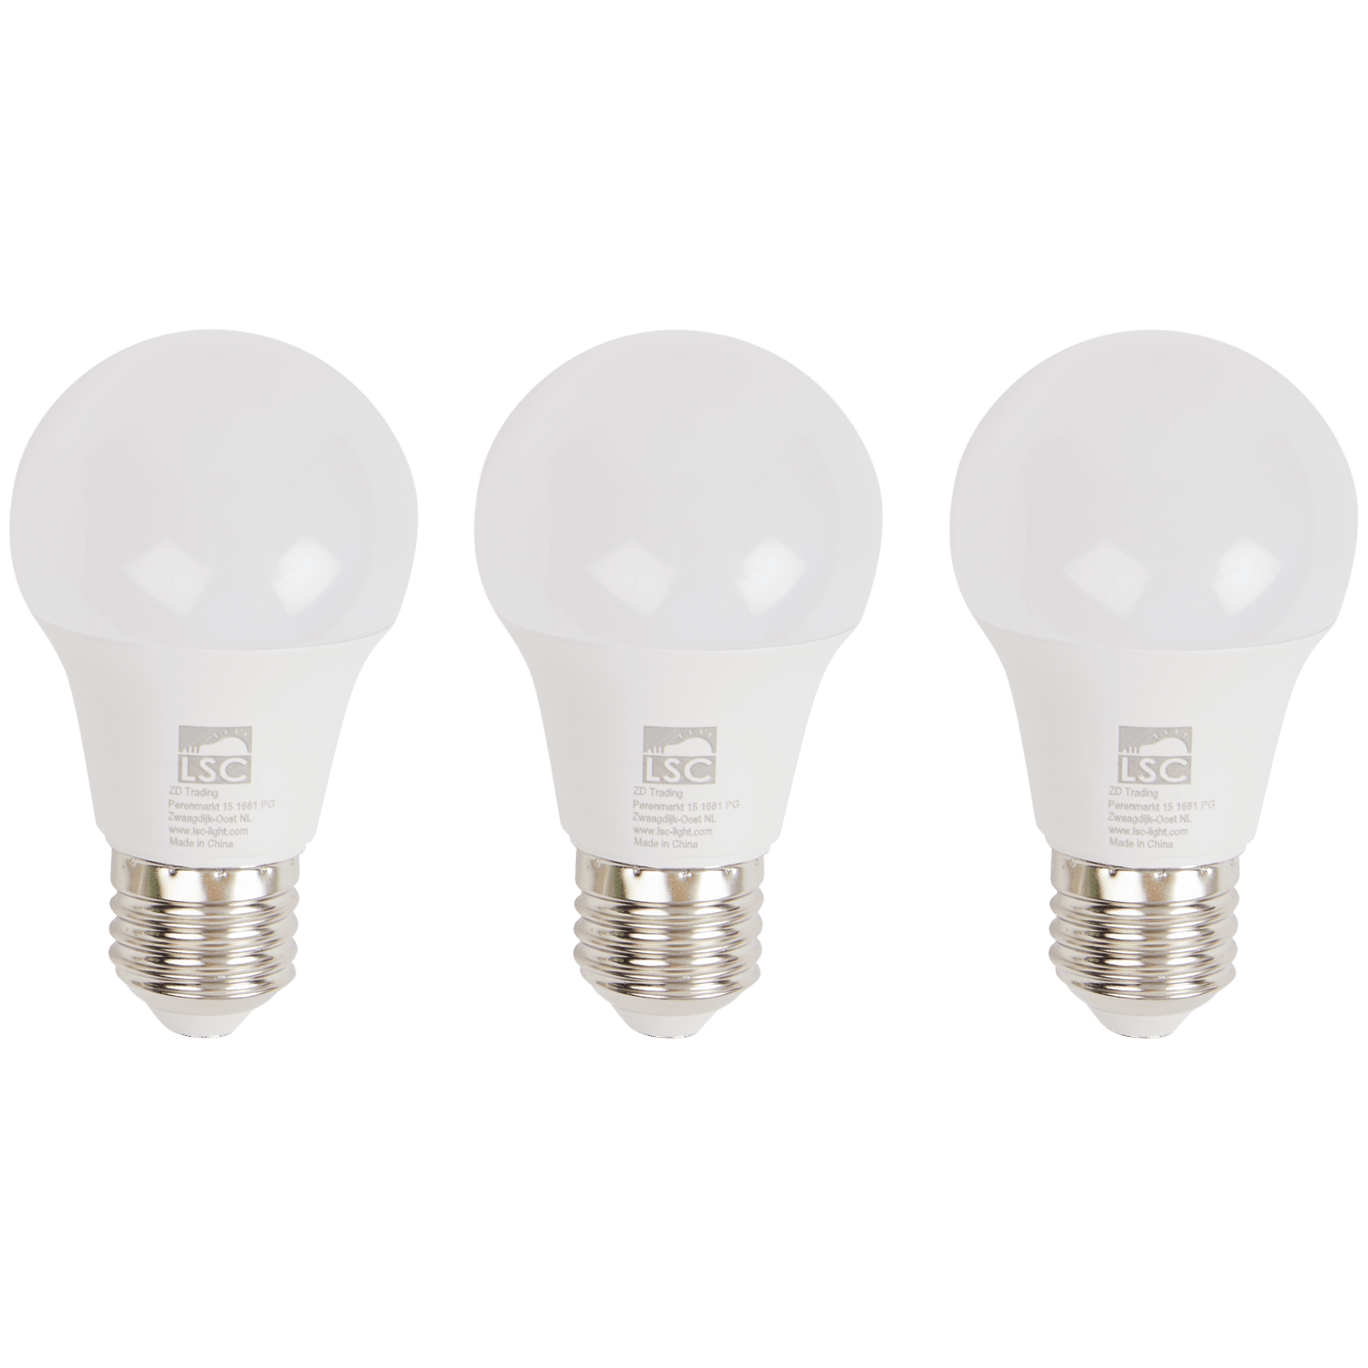 LSC LED-Lampen